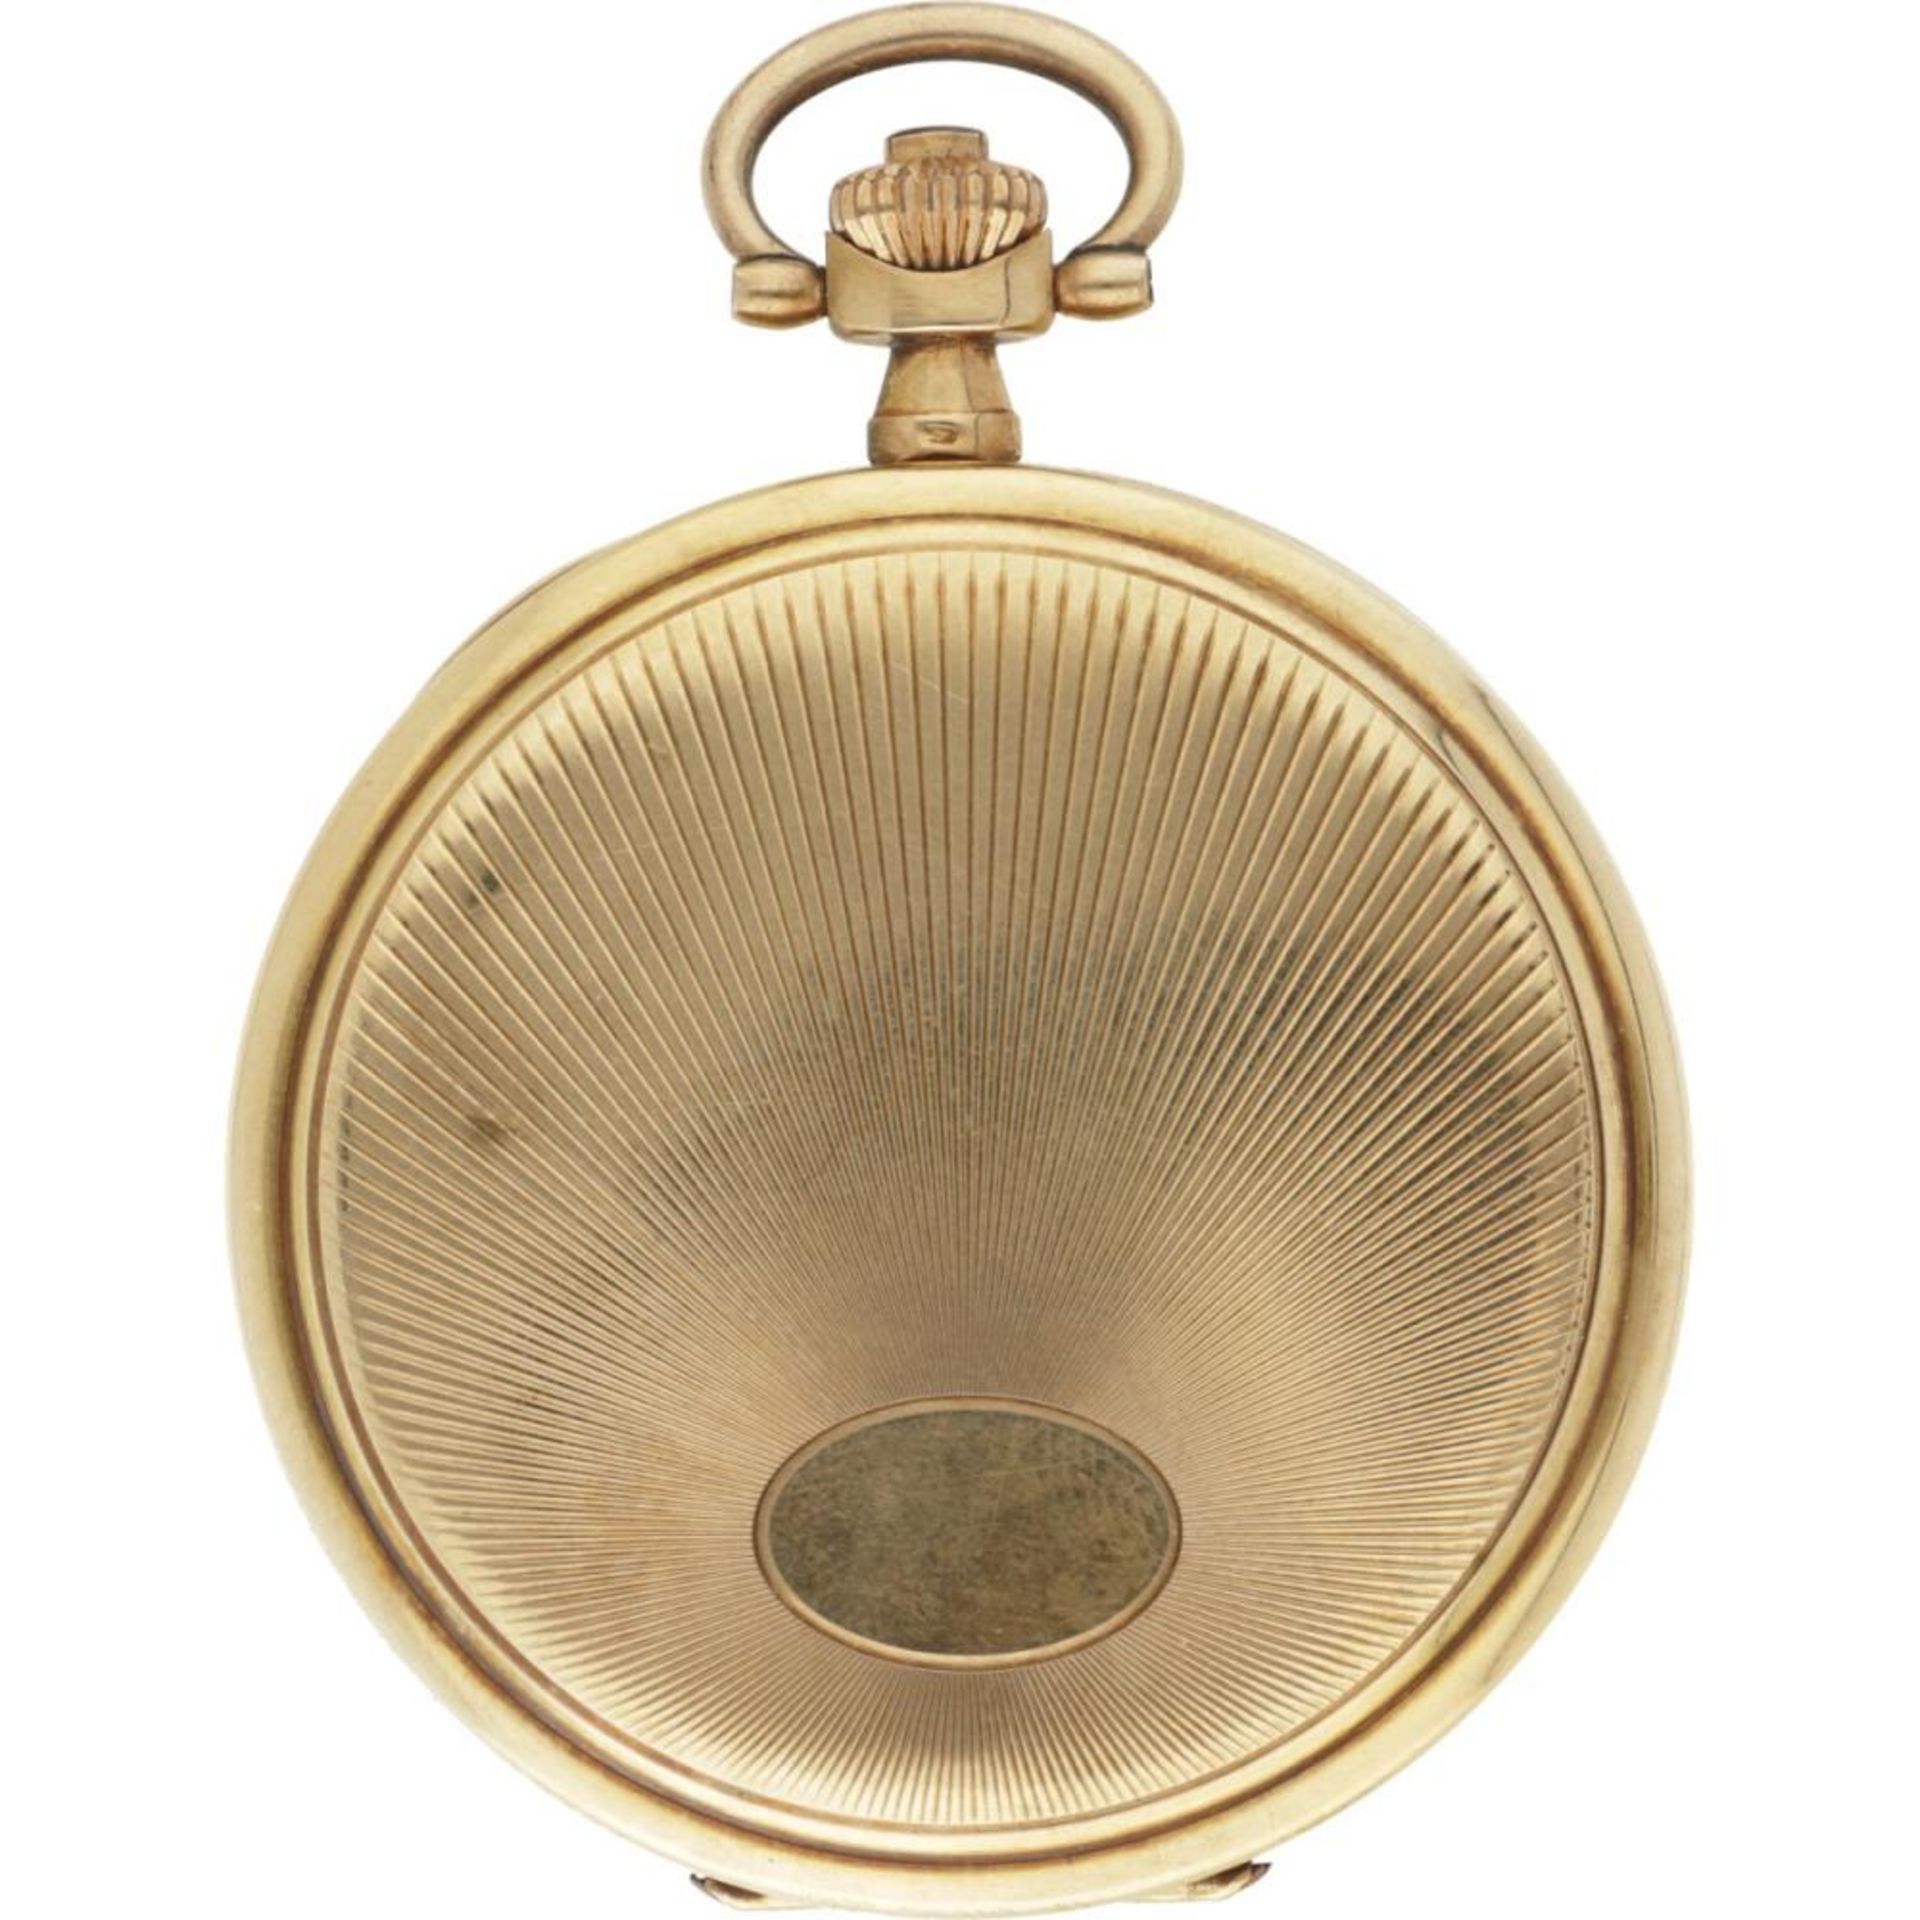 Golden Savonette lever-escapement - Men's pocket watch - approx. 1900. - Bild 2 aus 8